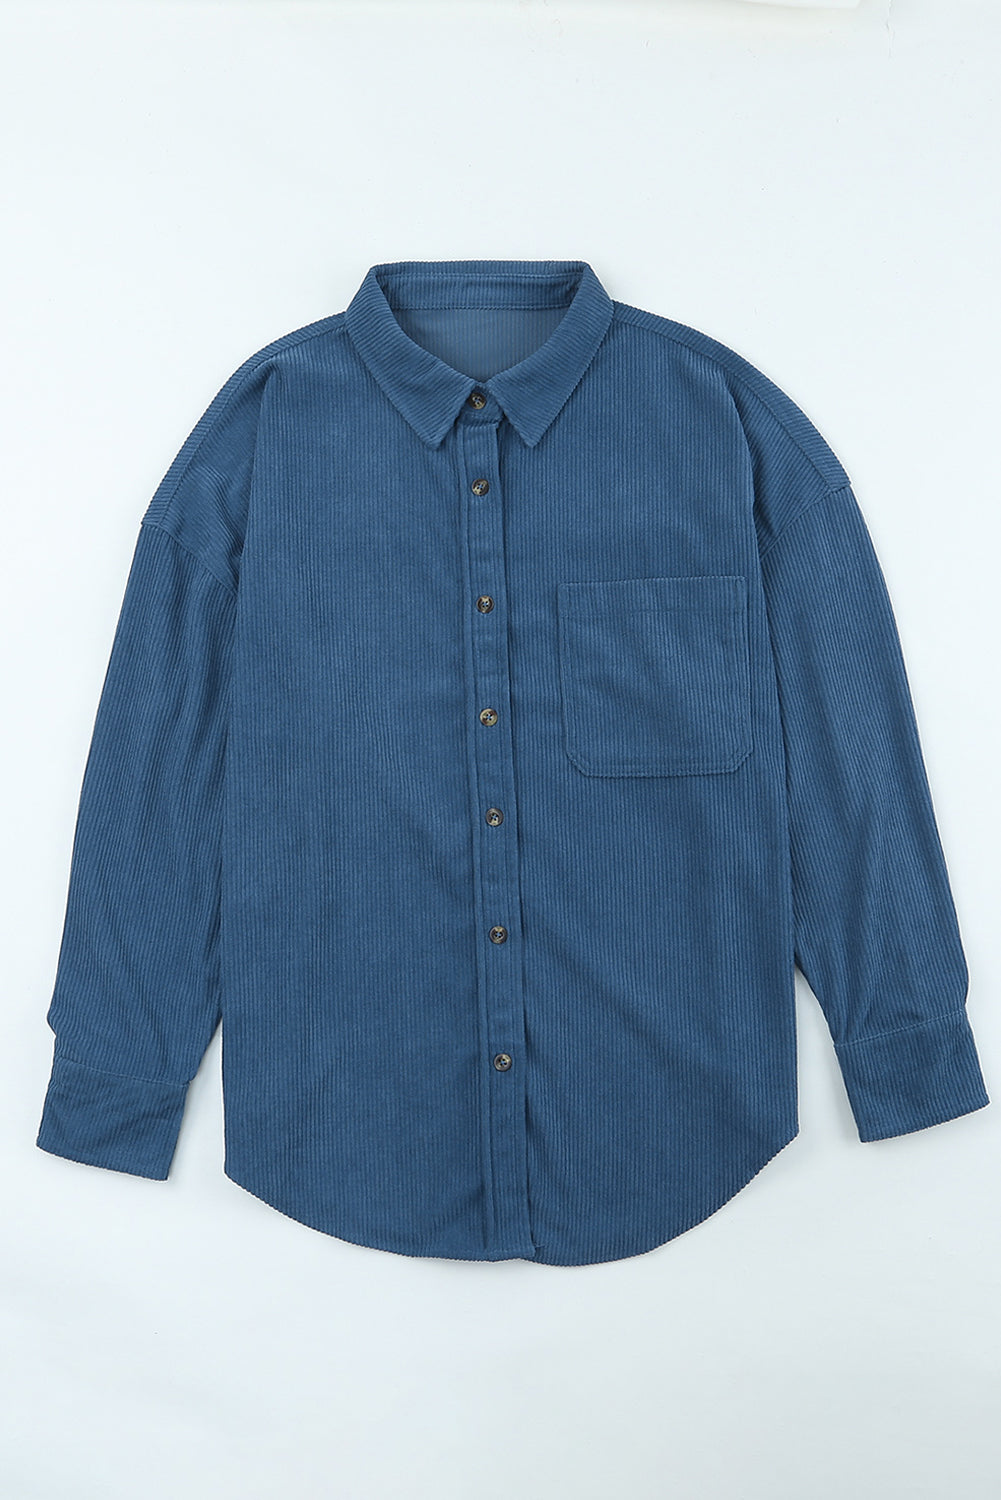 Blue Corduroy Button Pocket Shirt